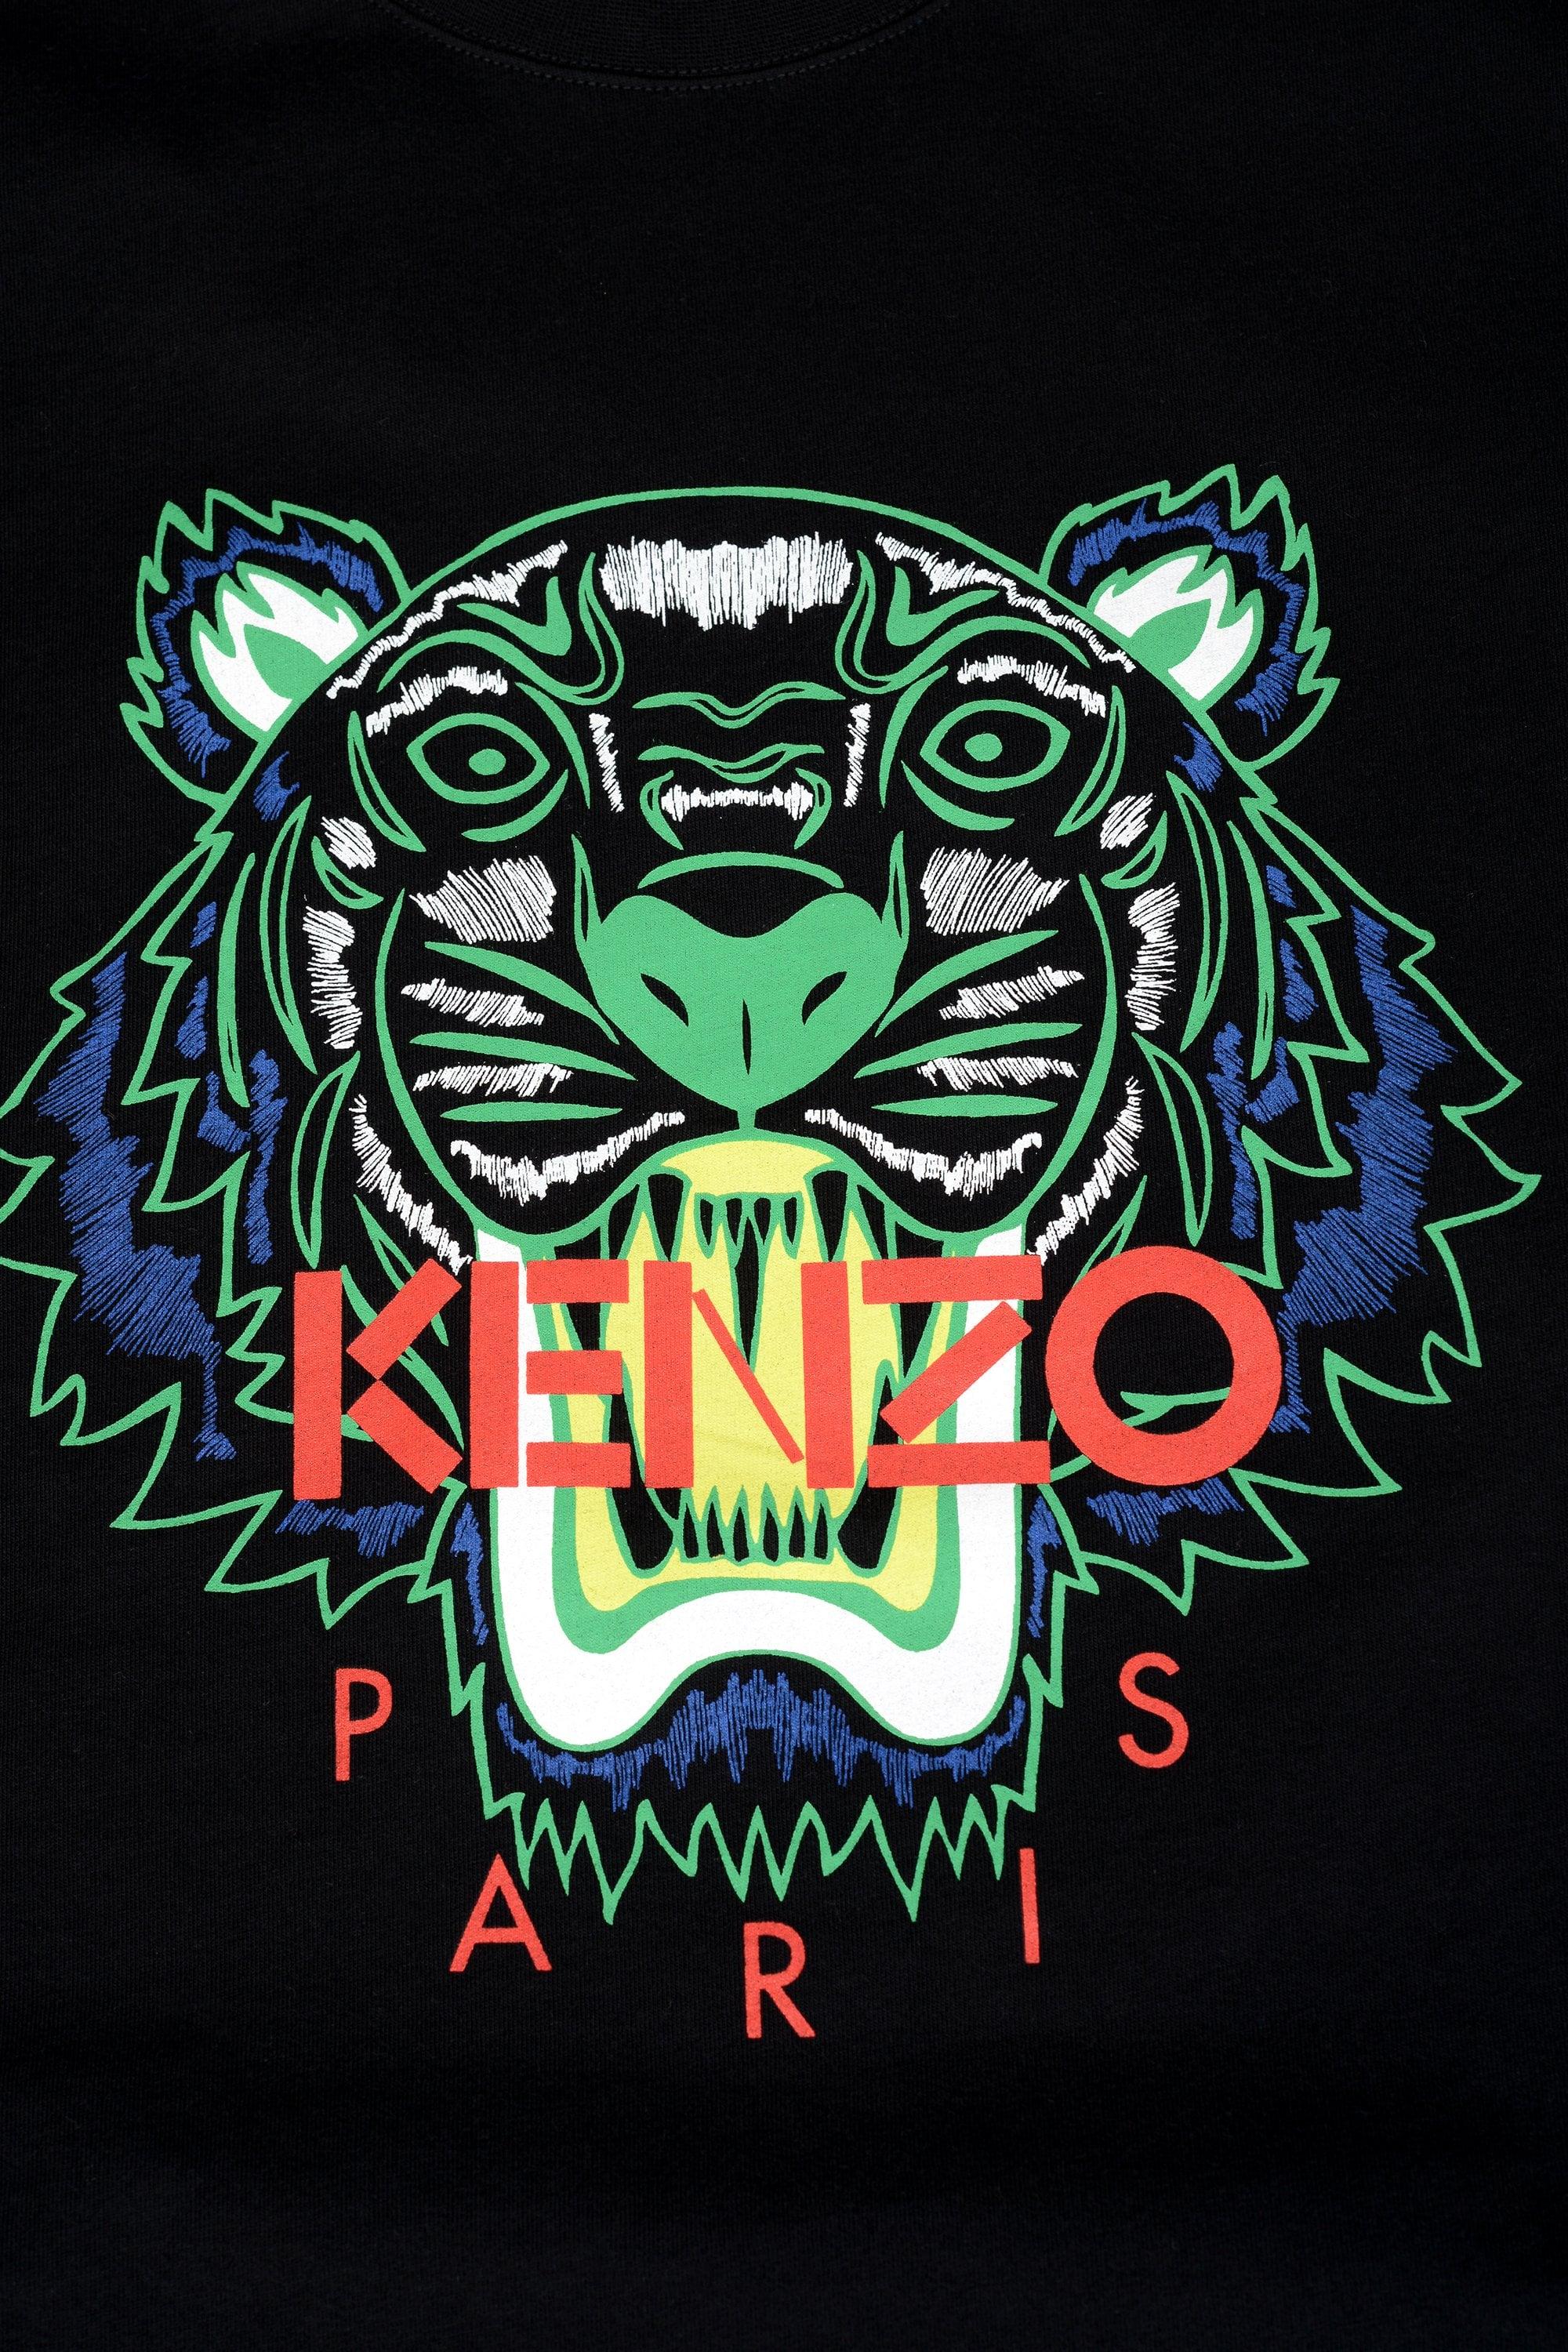 Kenzo Paris Clothing Hot Sale - www.puzzlewood.net 1694813800